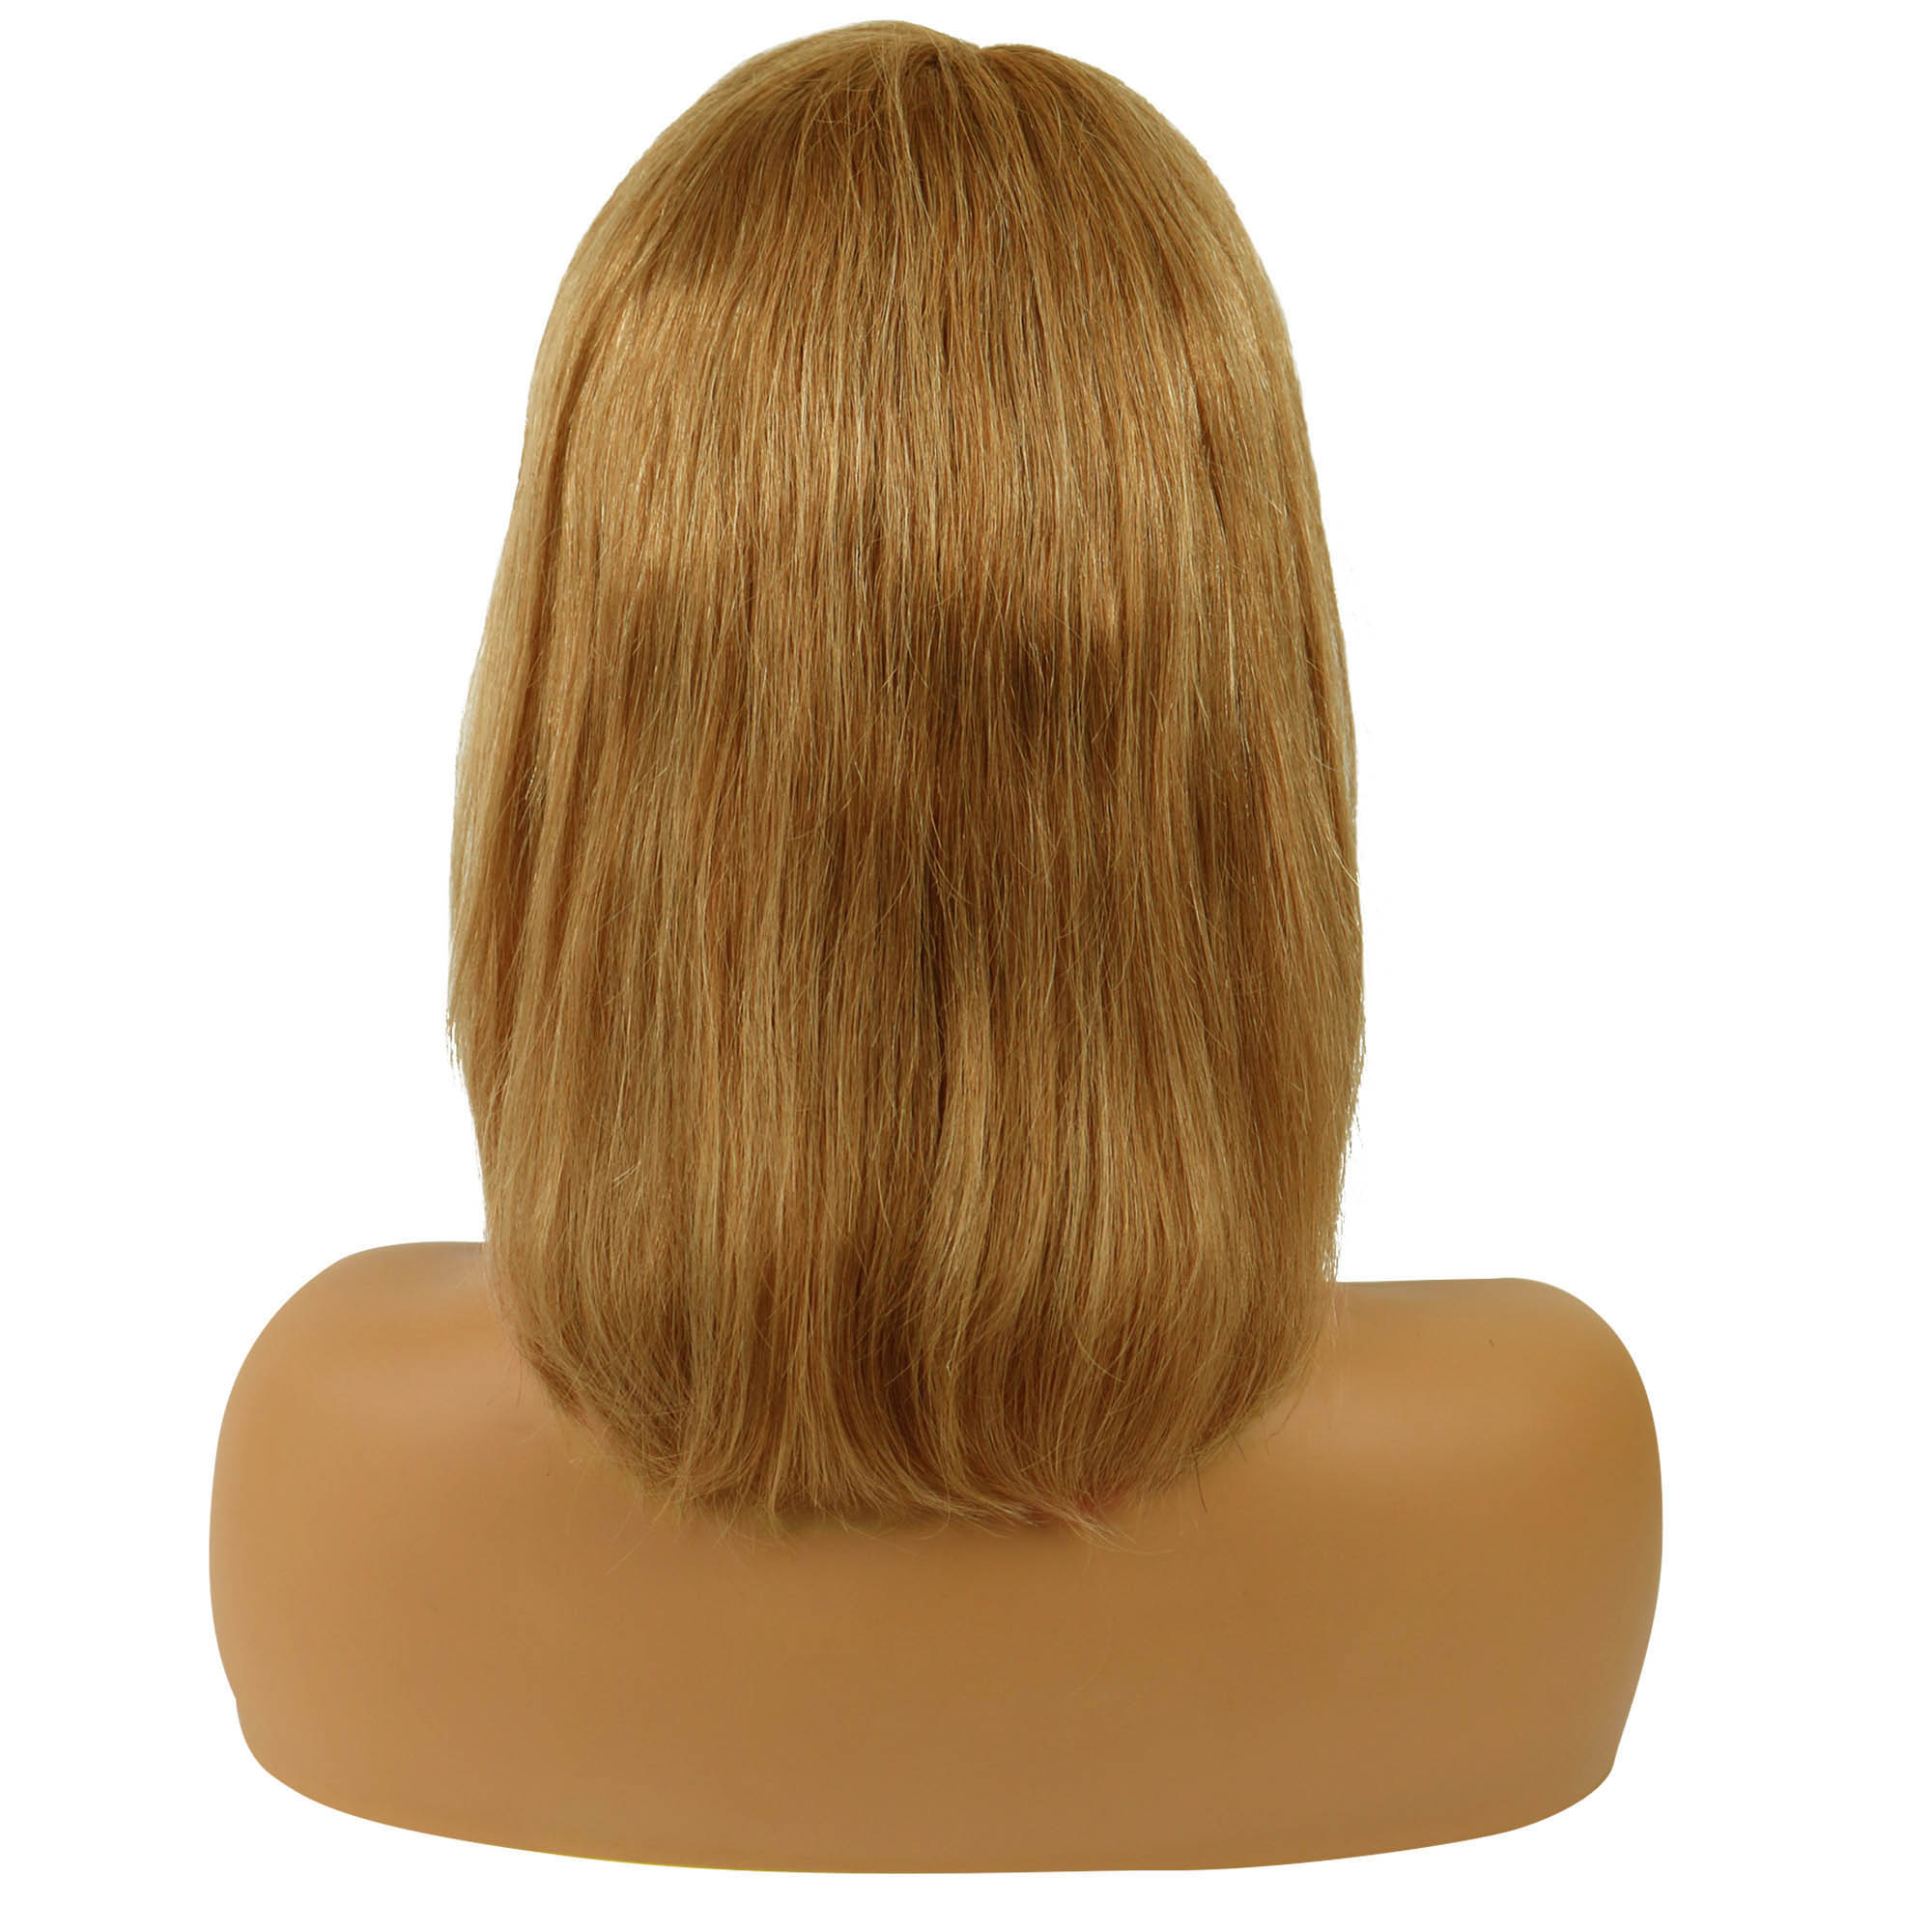 Invert Bob Medium Length Straight Human Hair Capless Wigs for Older Women